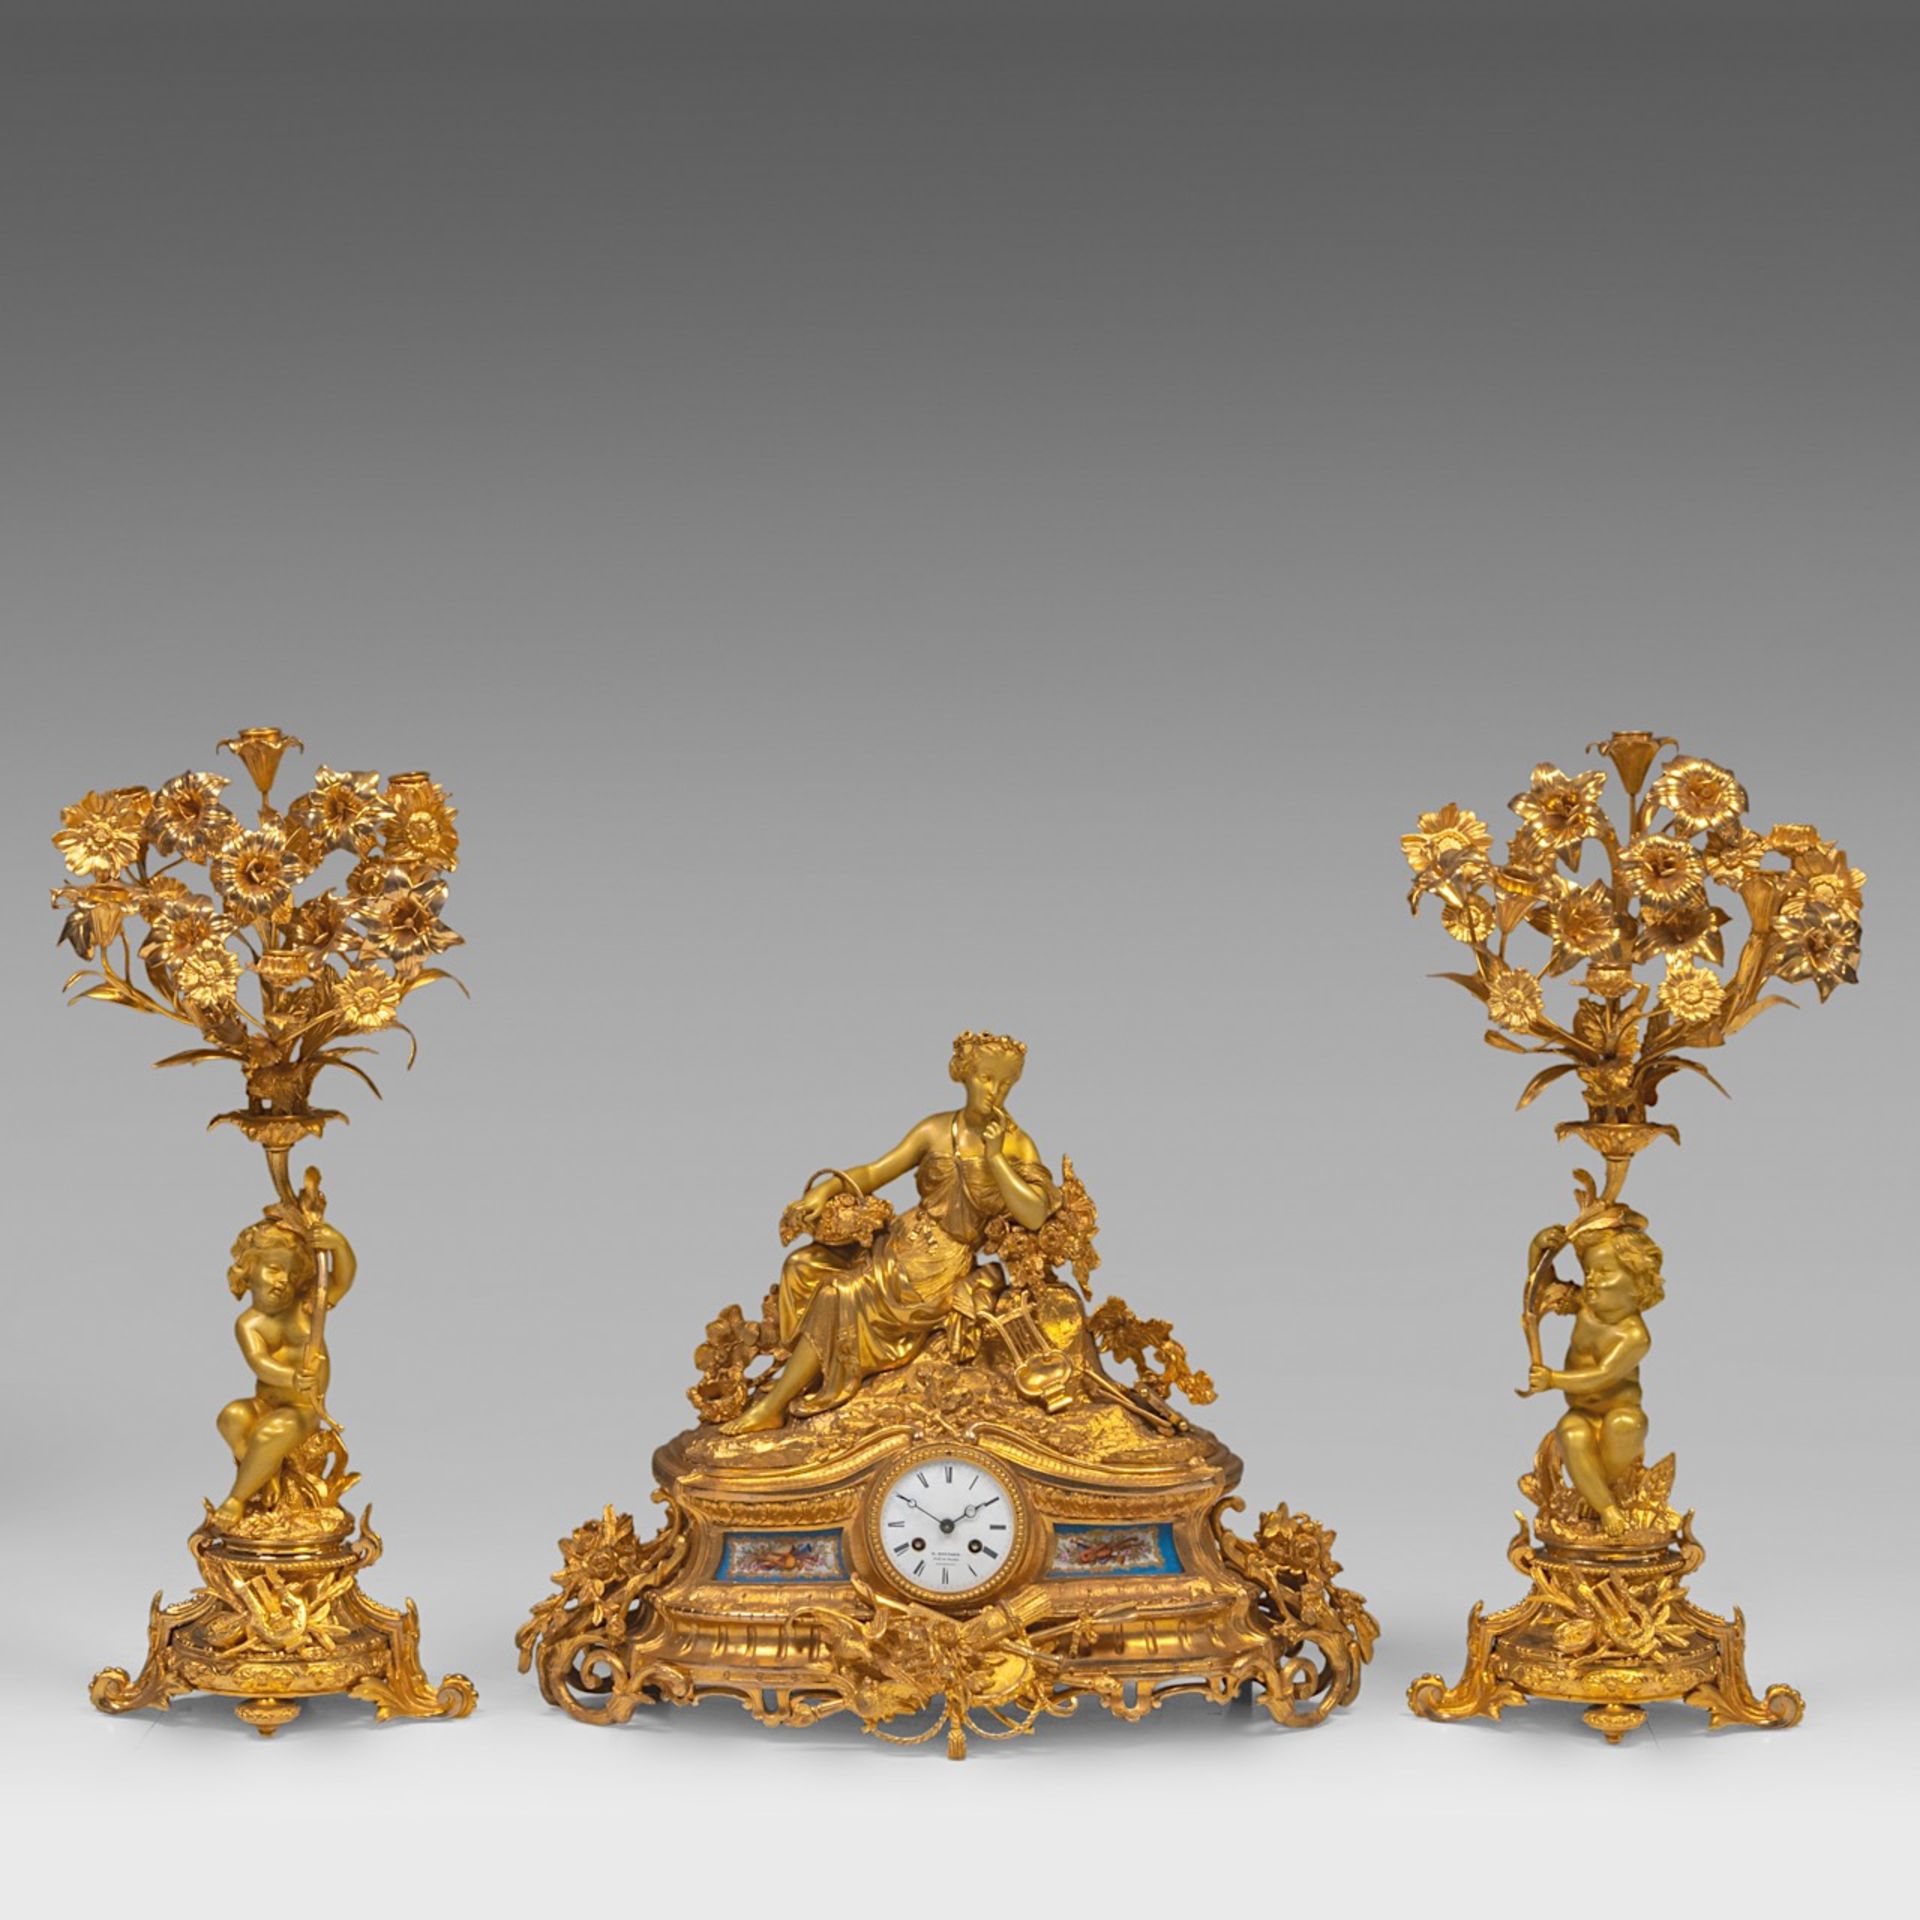 A Napoleon III gilt bronze three-piece mantle clock set, signed 'R. Bouvier, Bruxelles', H 48 - 66 c